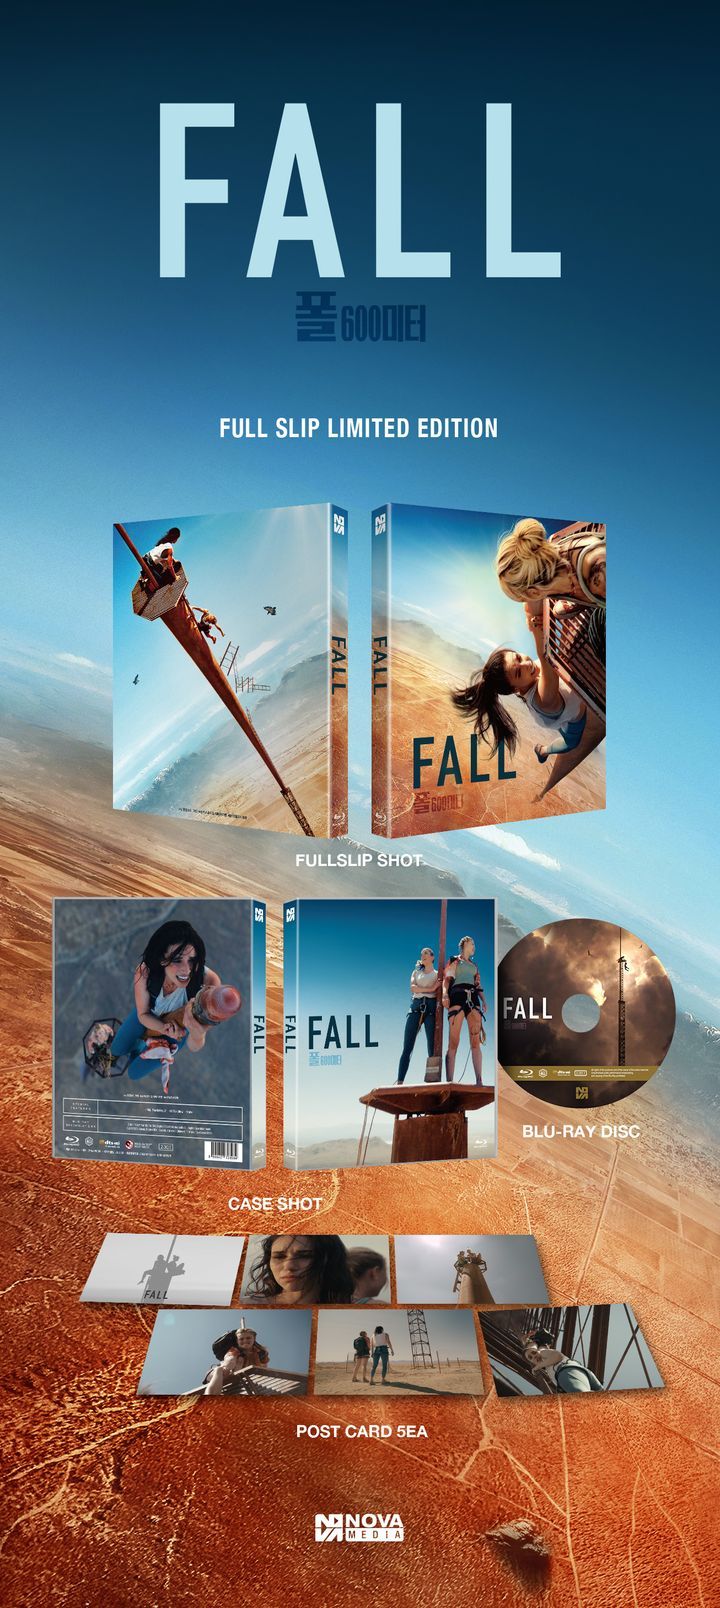 Fall Blu-ray (Blu-ray + Digital HD)